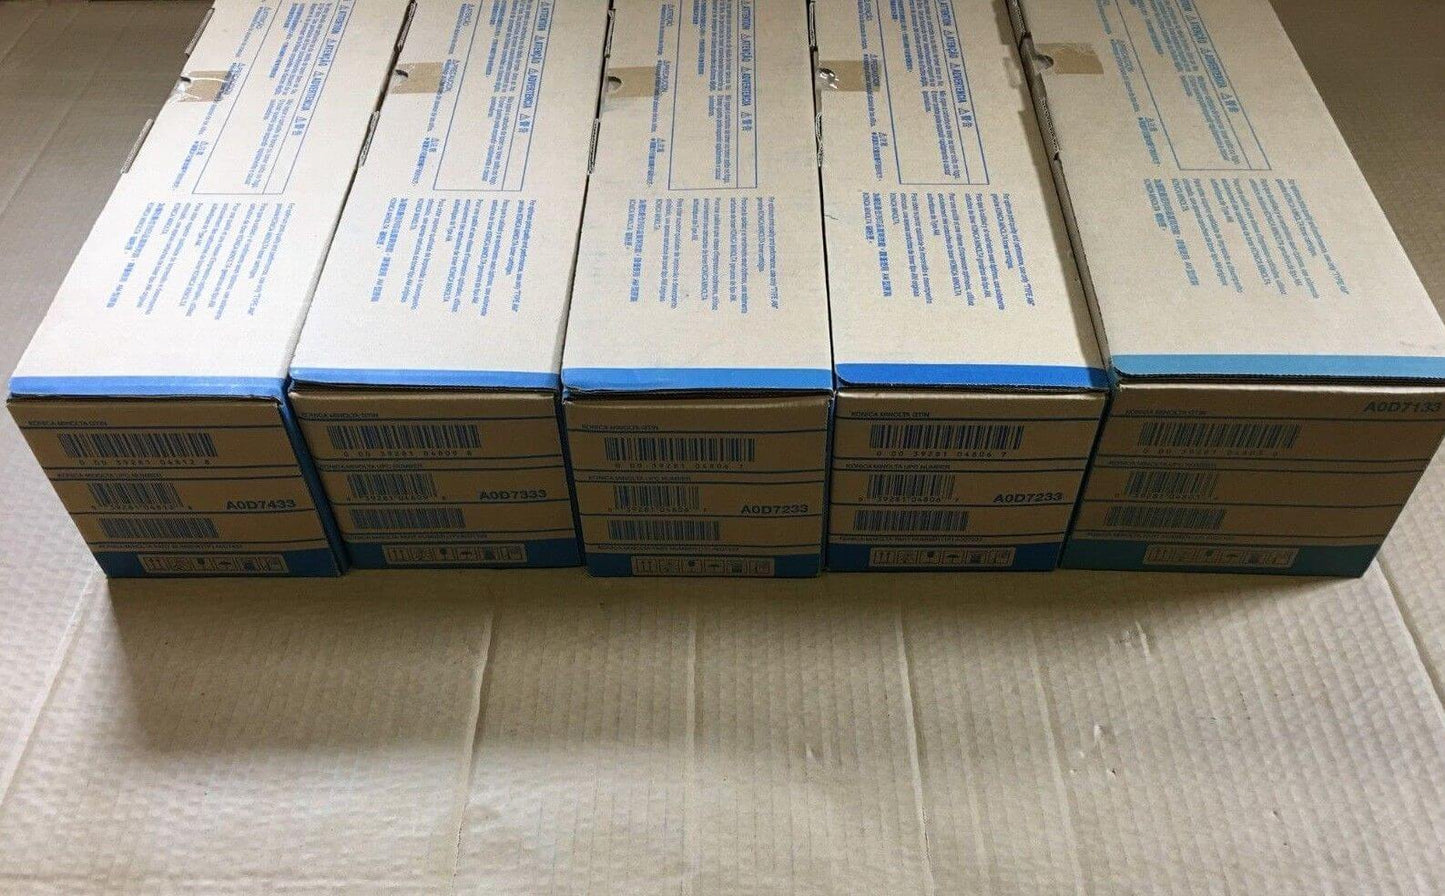 Lot of 5 OEM Konica Minolta 8600 series CMYK Toner Set A0D7433 - Fedex 2 Day - copier-clearance-center